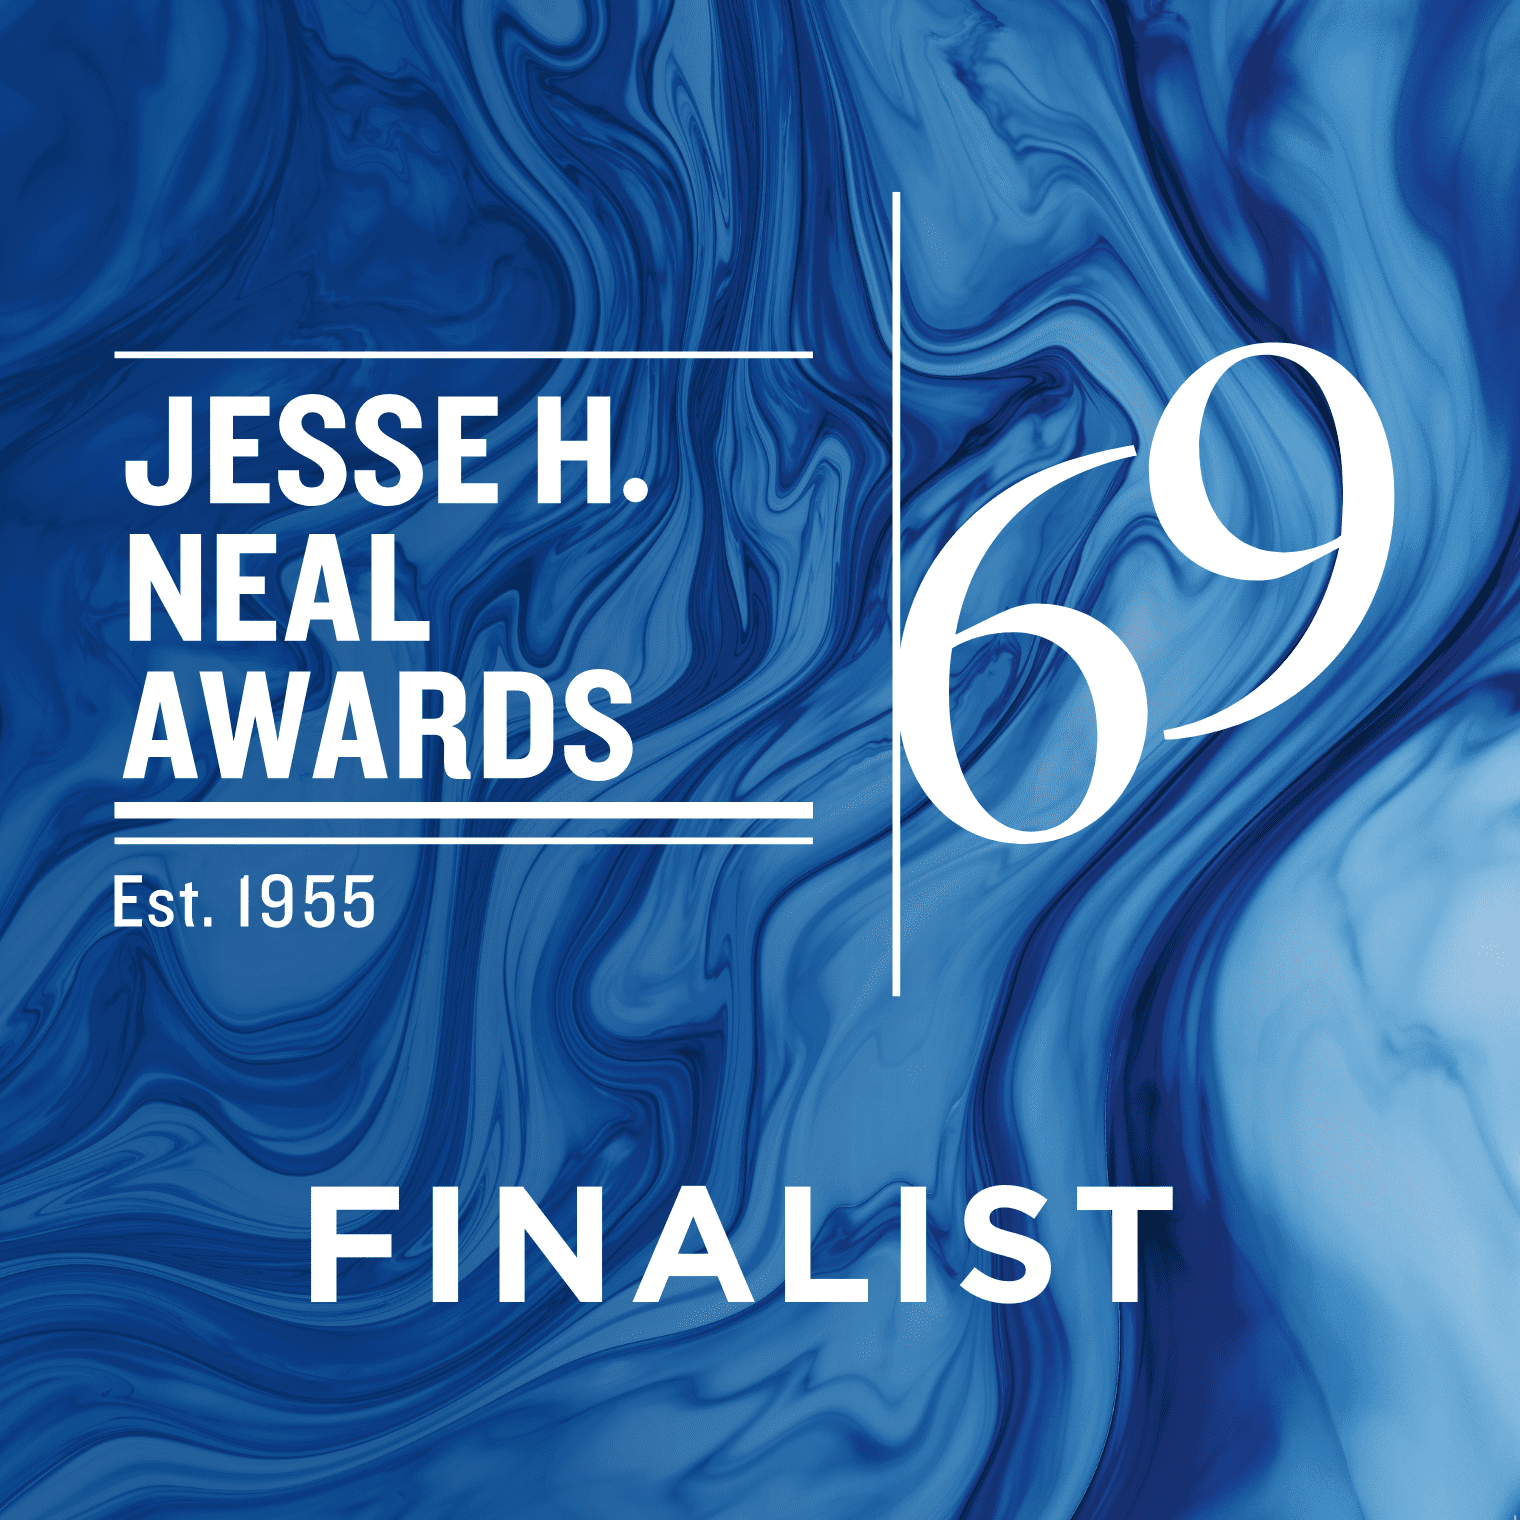 Neal awards finalist